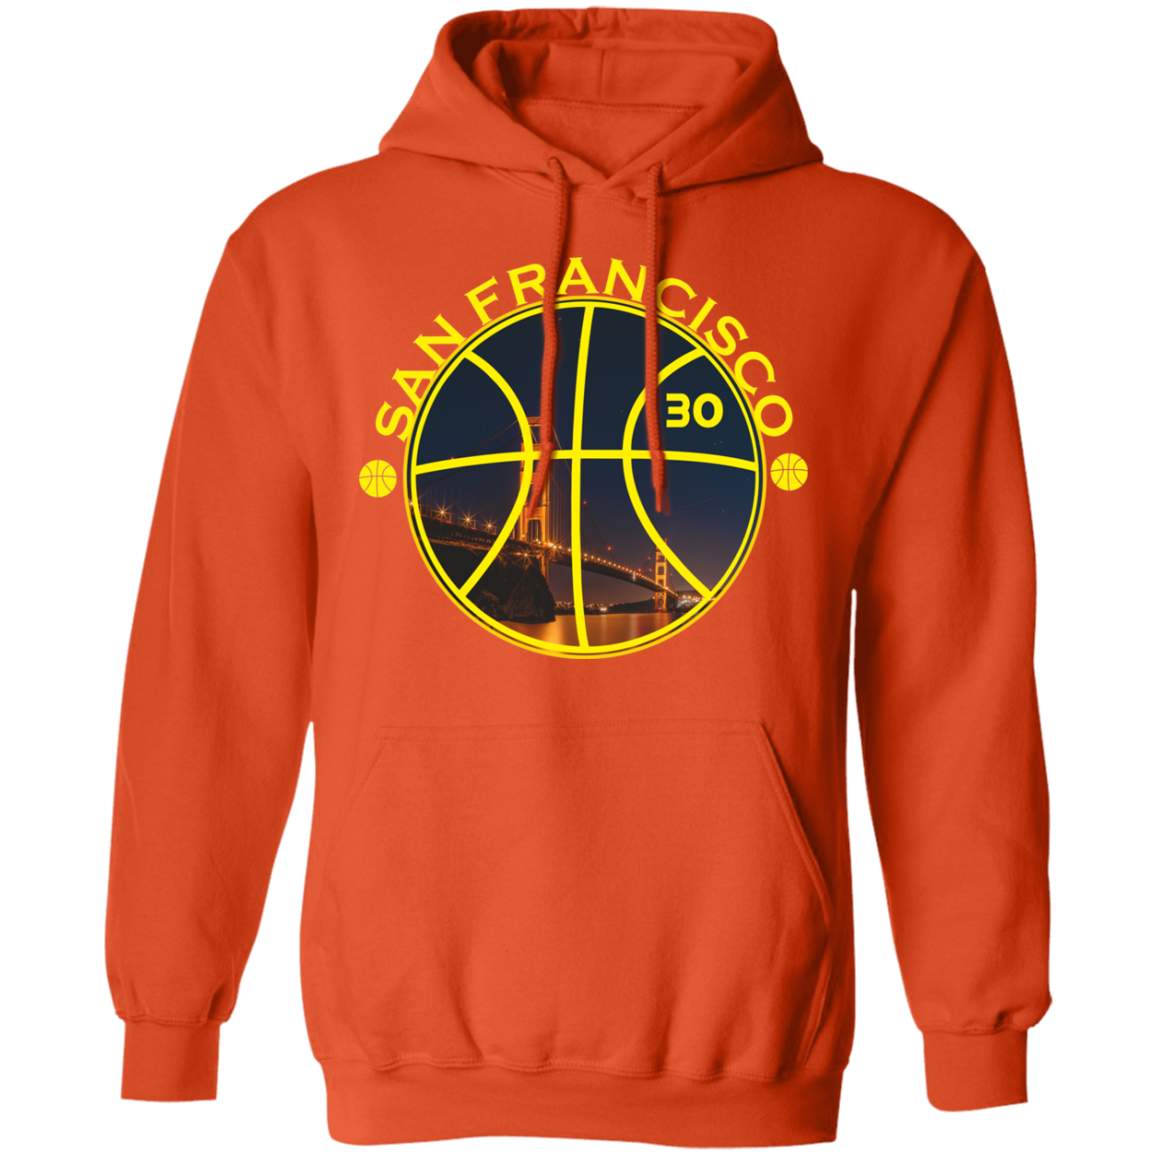 Gildan San Francisco Warriors Pullover Hoodie Orange 3XL